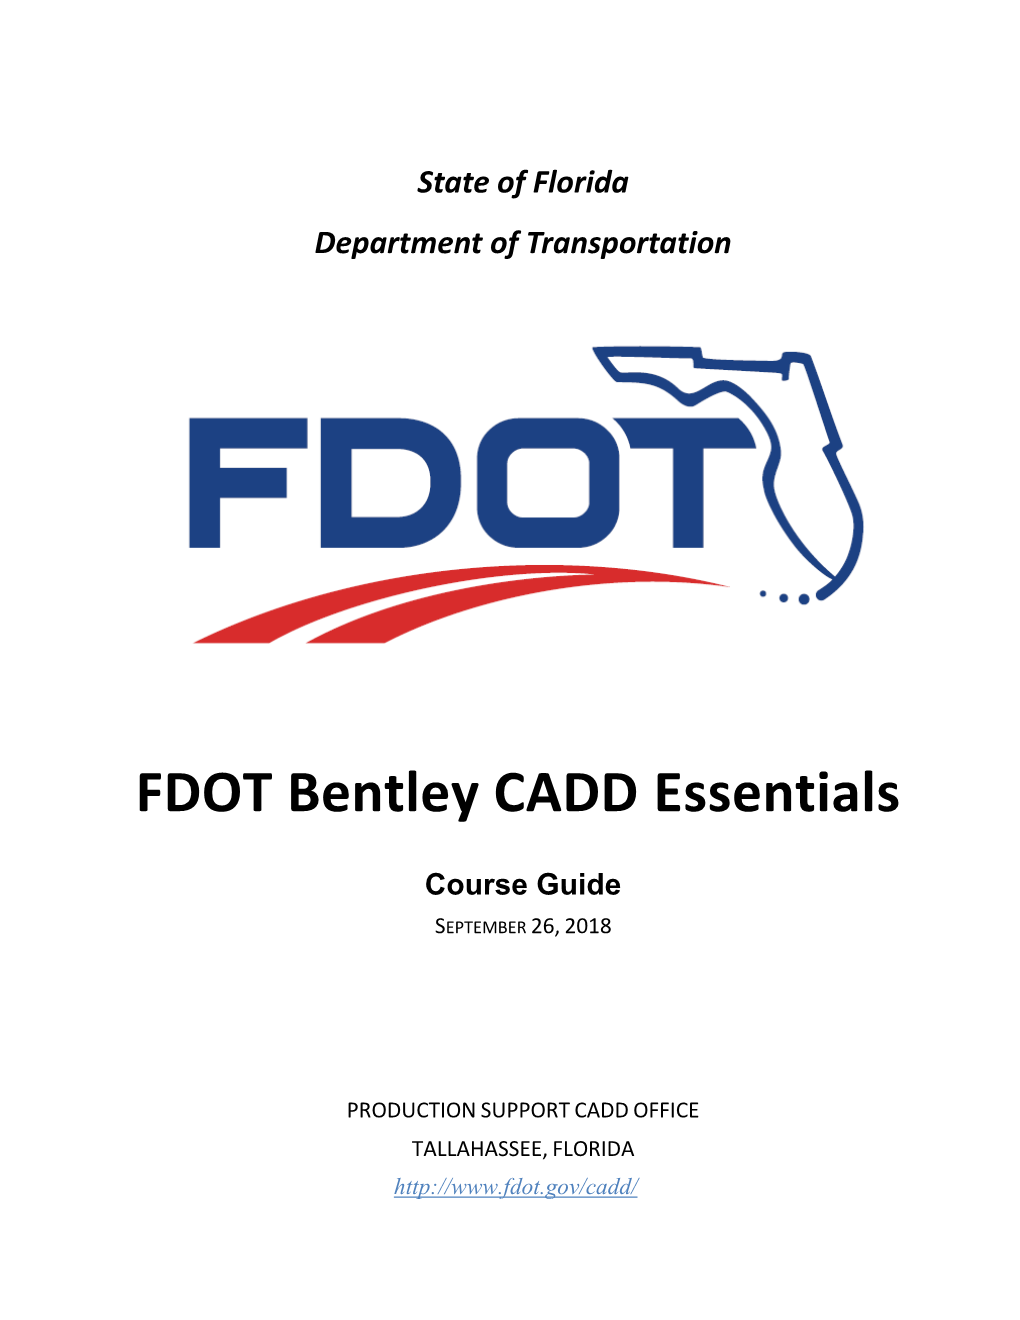 FDOT Bentley CADD Essentials